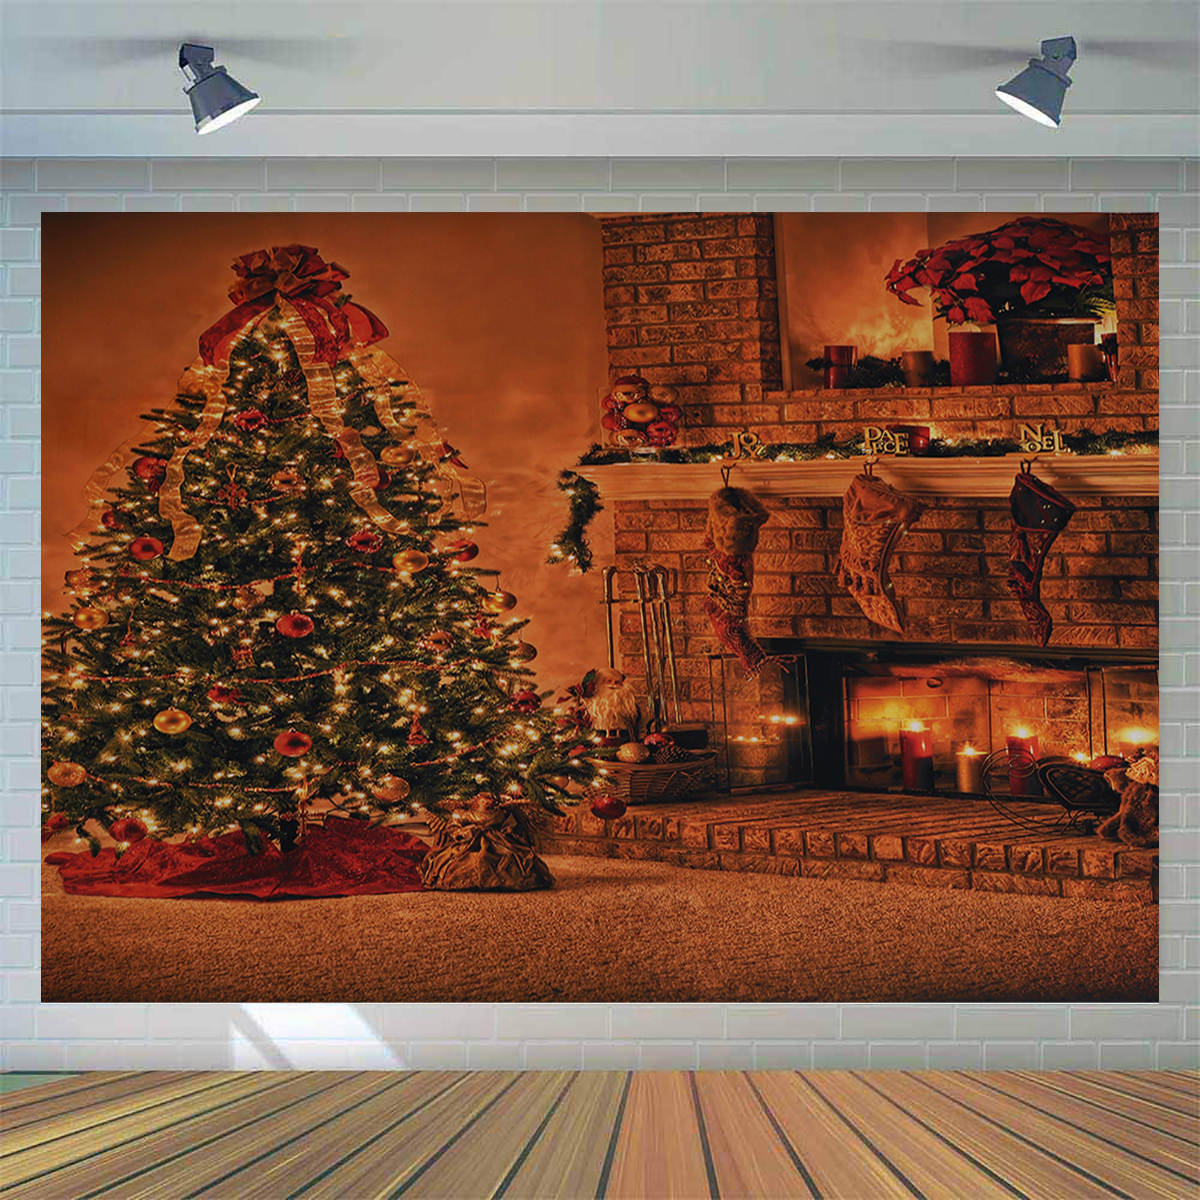 1x15m-15x22m-18x25m-Christmas-Tree-Fireplace-Socks-Photography-Backdrop-Cloth-for-Photo-Studio-Backd-1764545-4